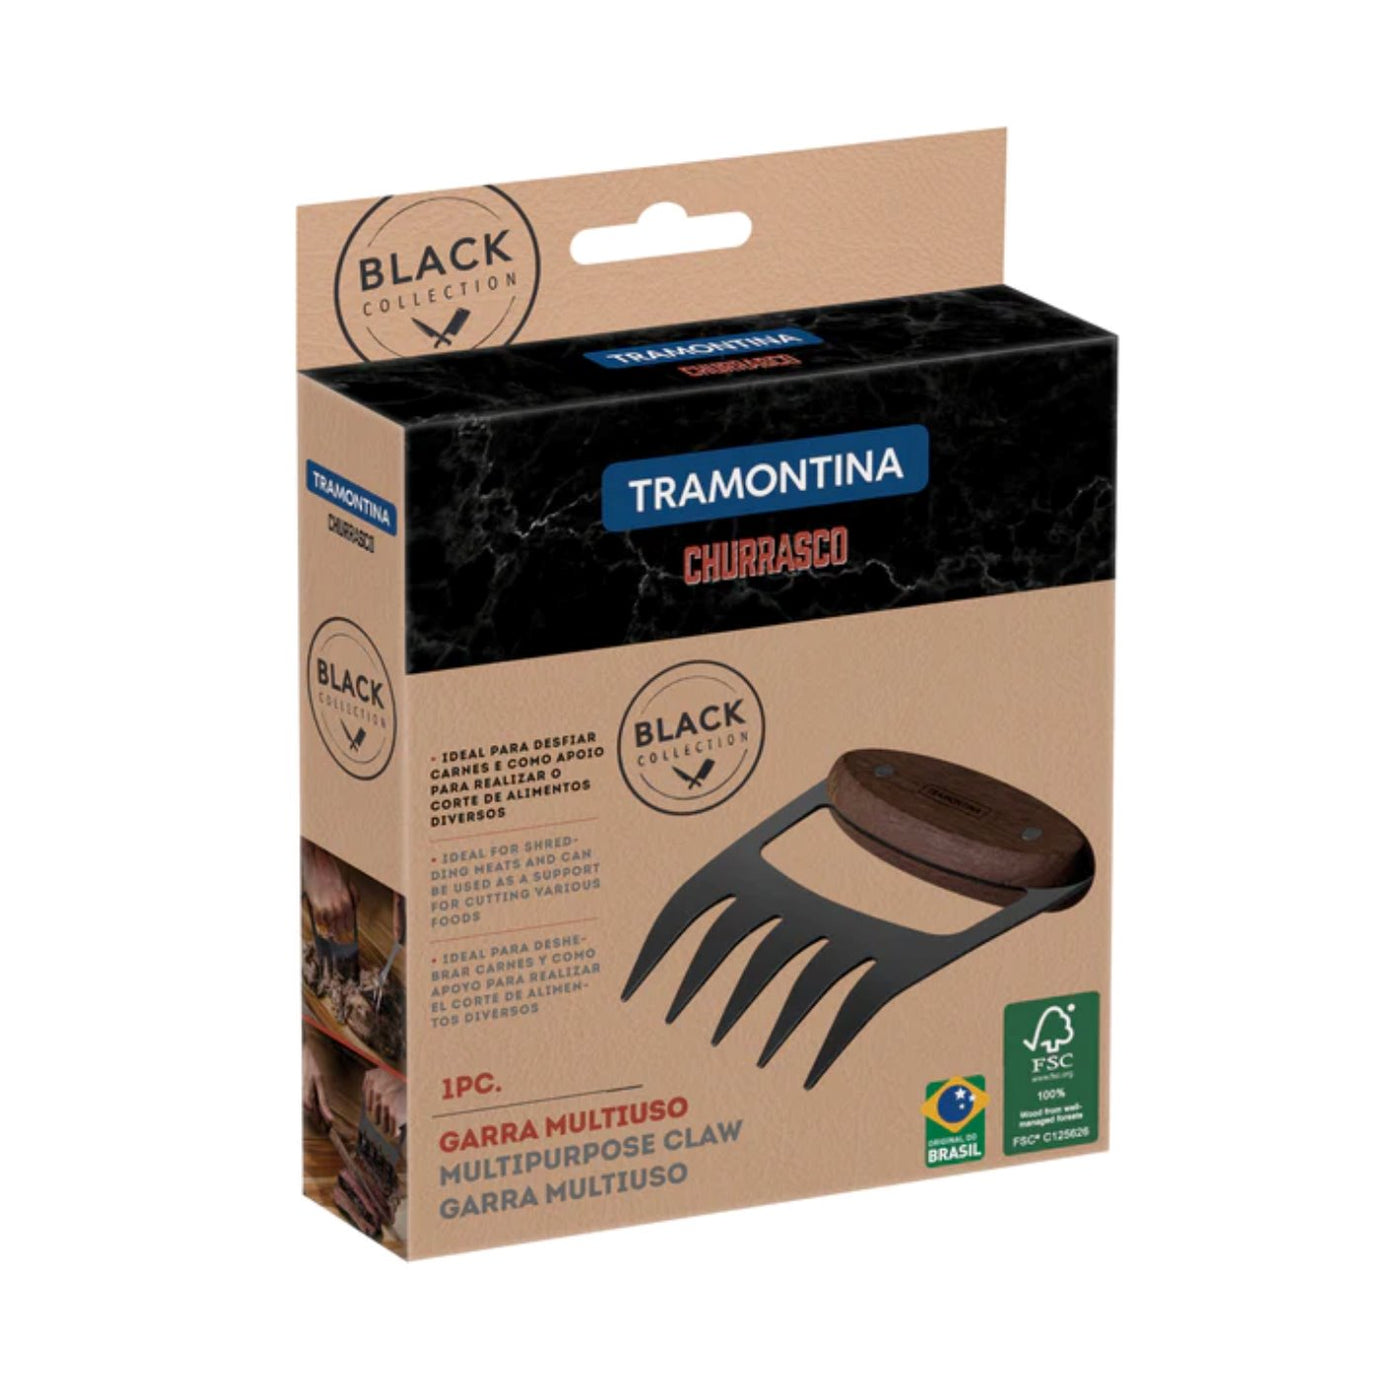 Tramontina Churrasco Black Collection Barbecue Claw